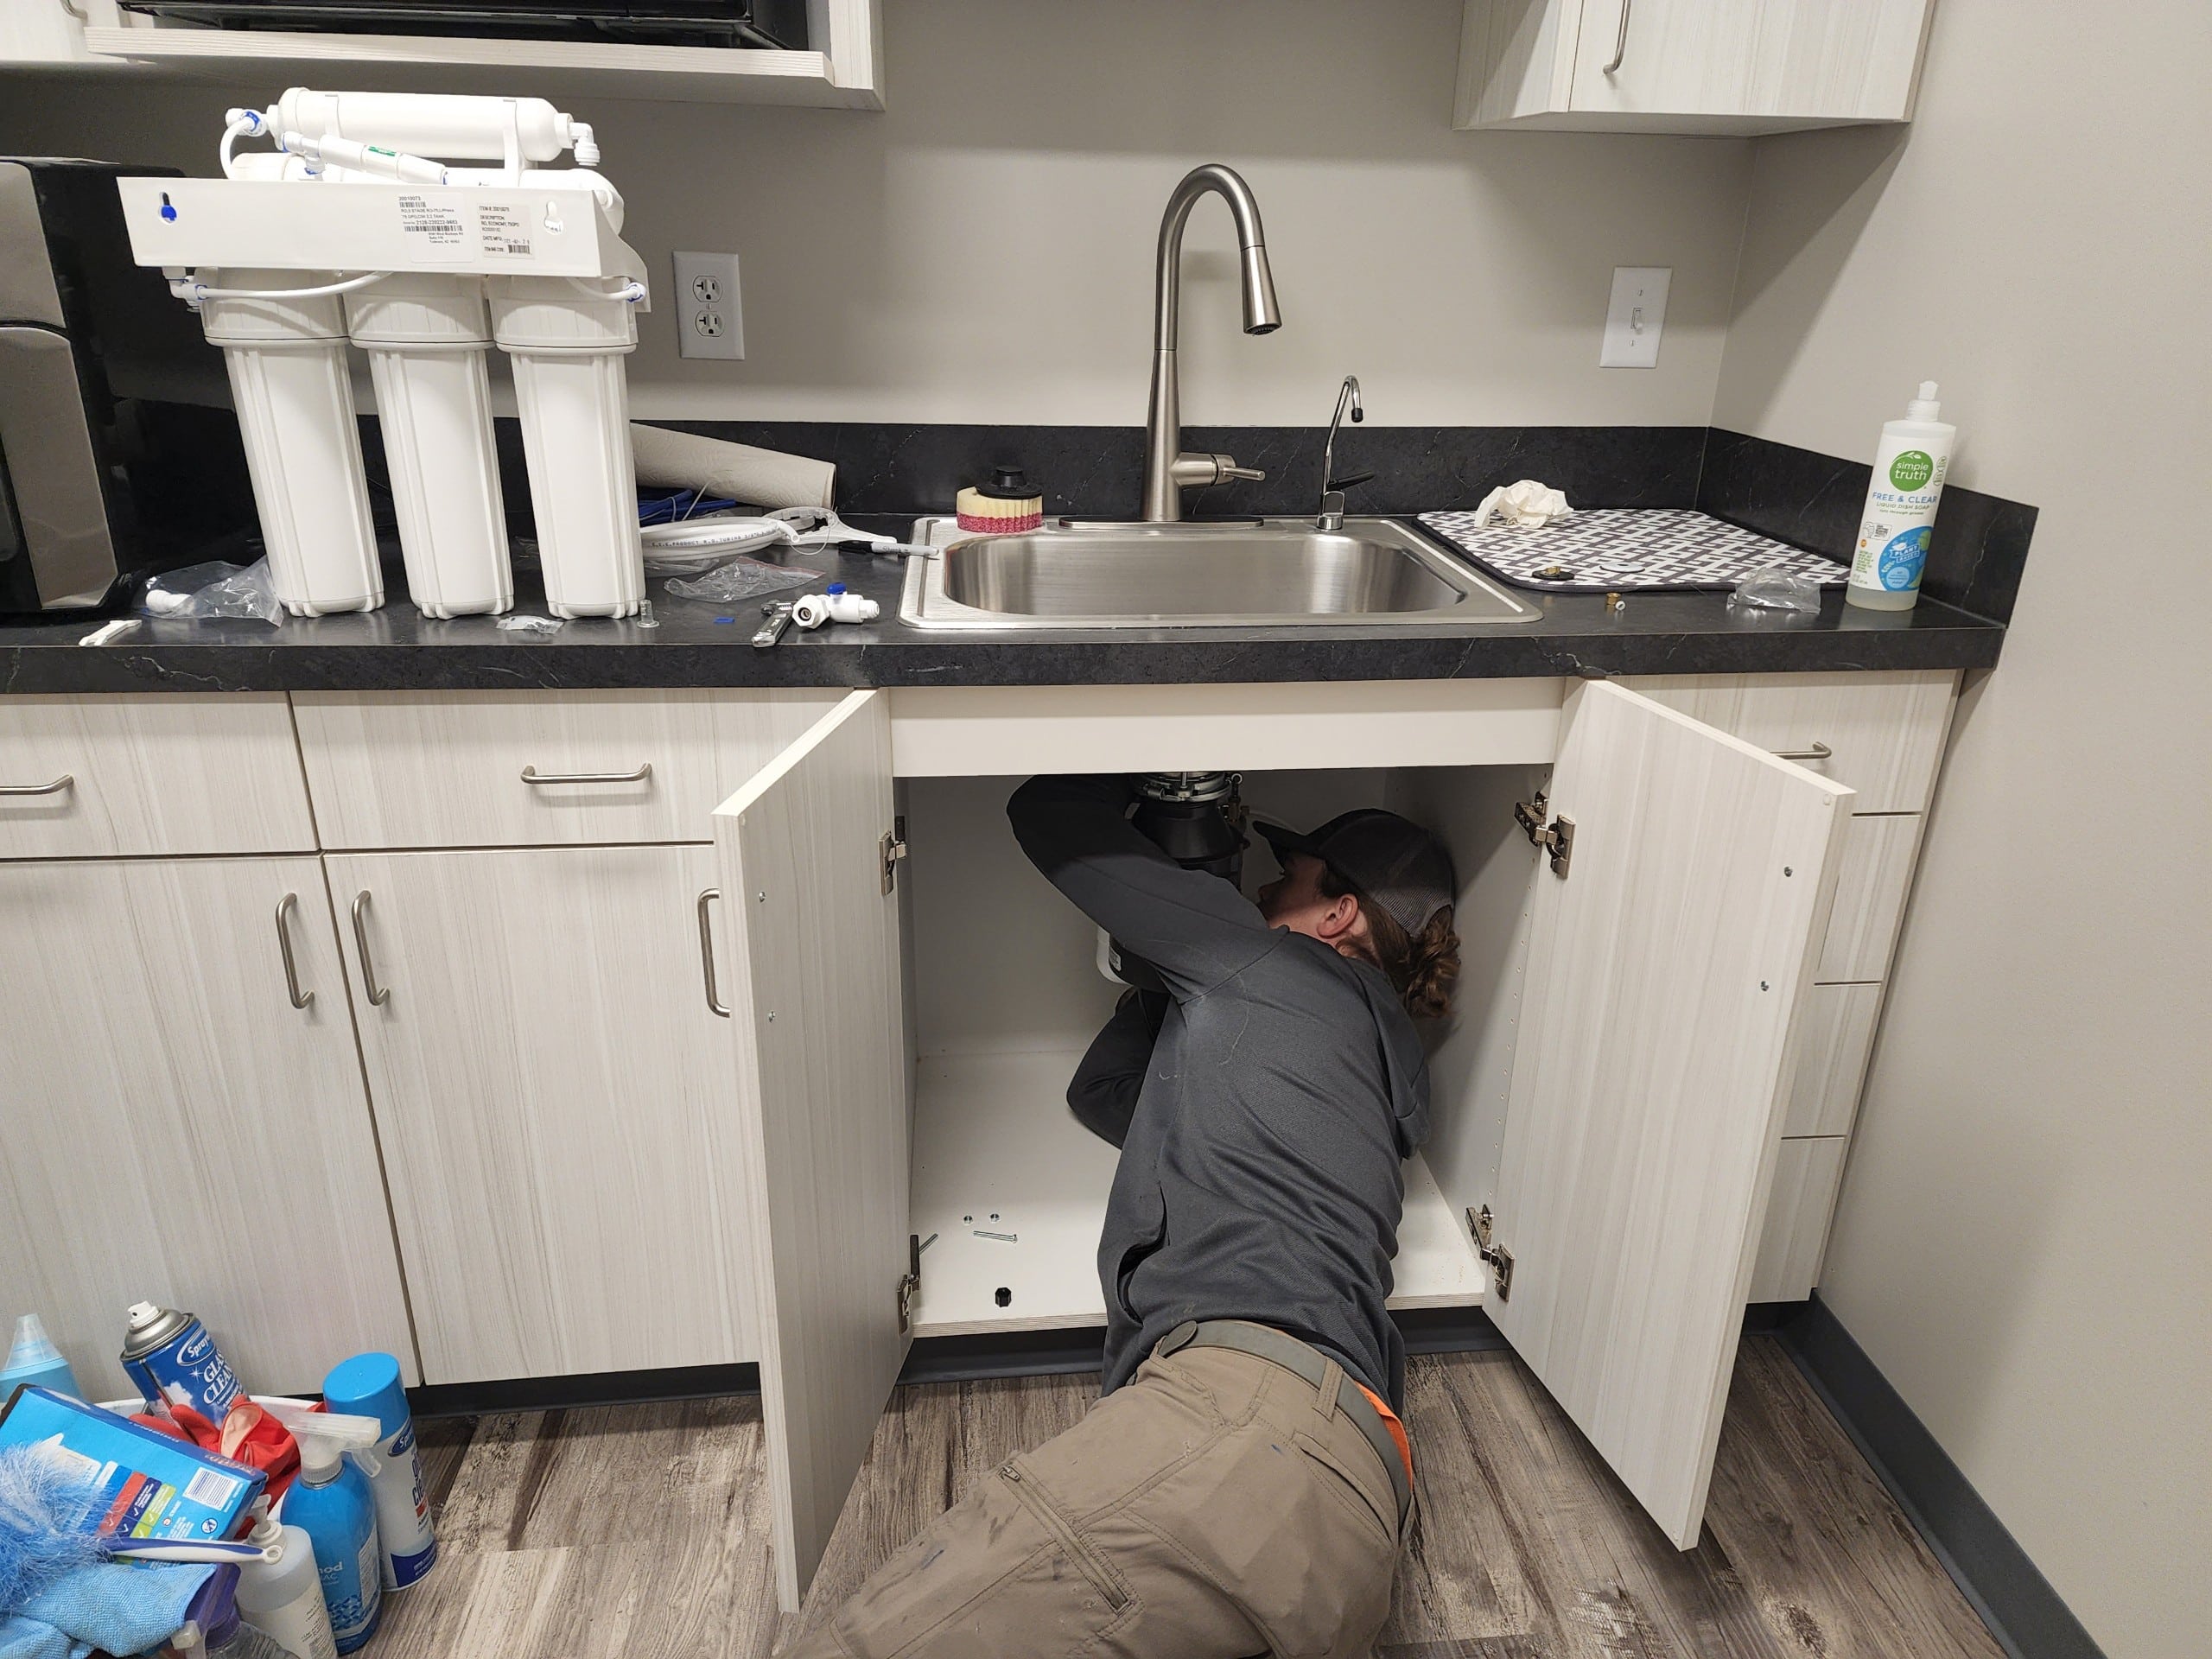 ogden utah water filtration system Plumber plumbers Plumbing inspections